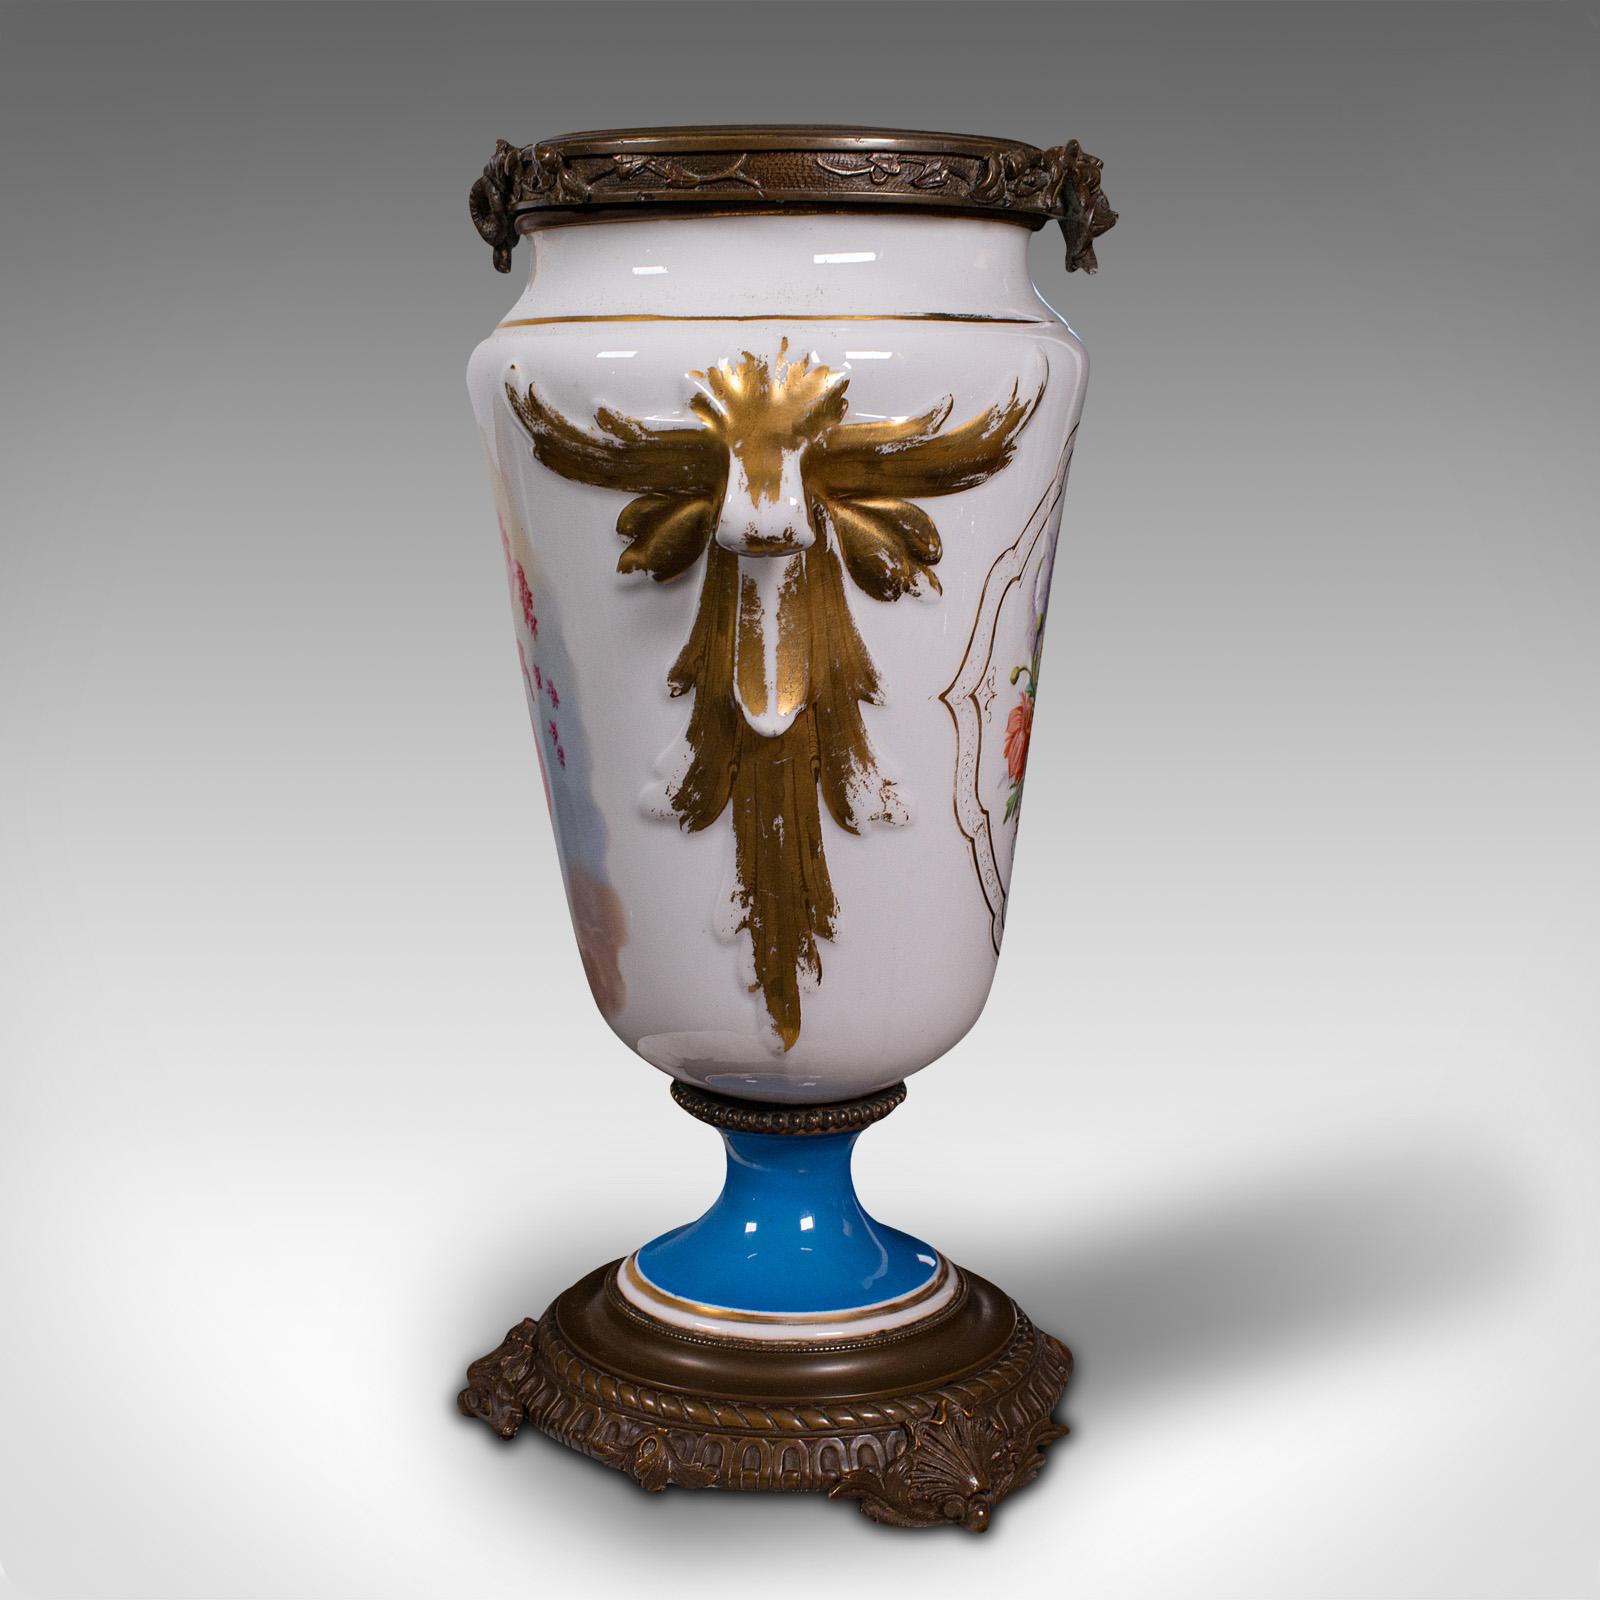 19th Century Antique Decorative Jardiniere, French, Ceramic, Display Planter, Vase, Victorian For Sale